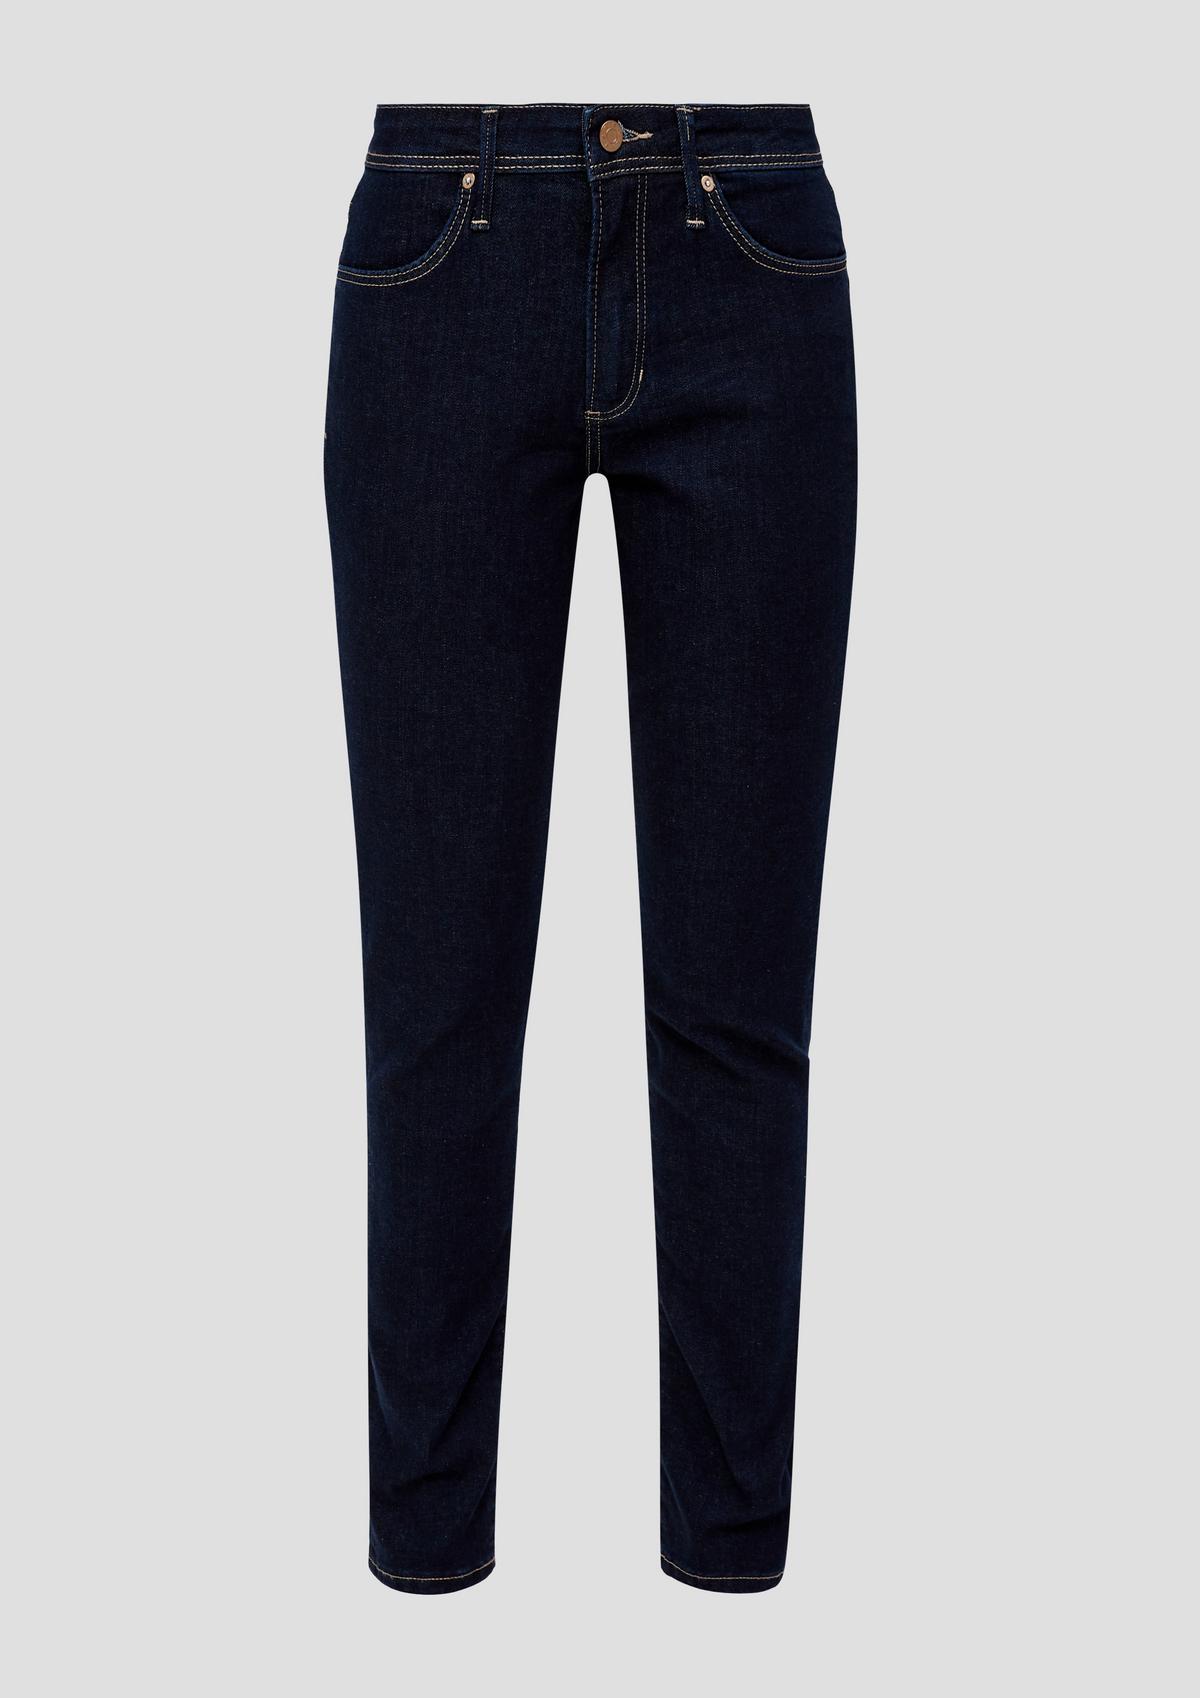 s.Oliver Betsy jeans / slim fit / mid rise / slim leg